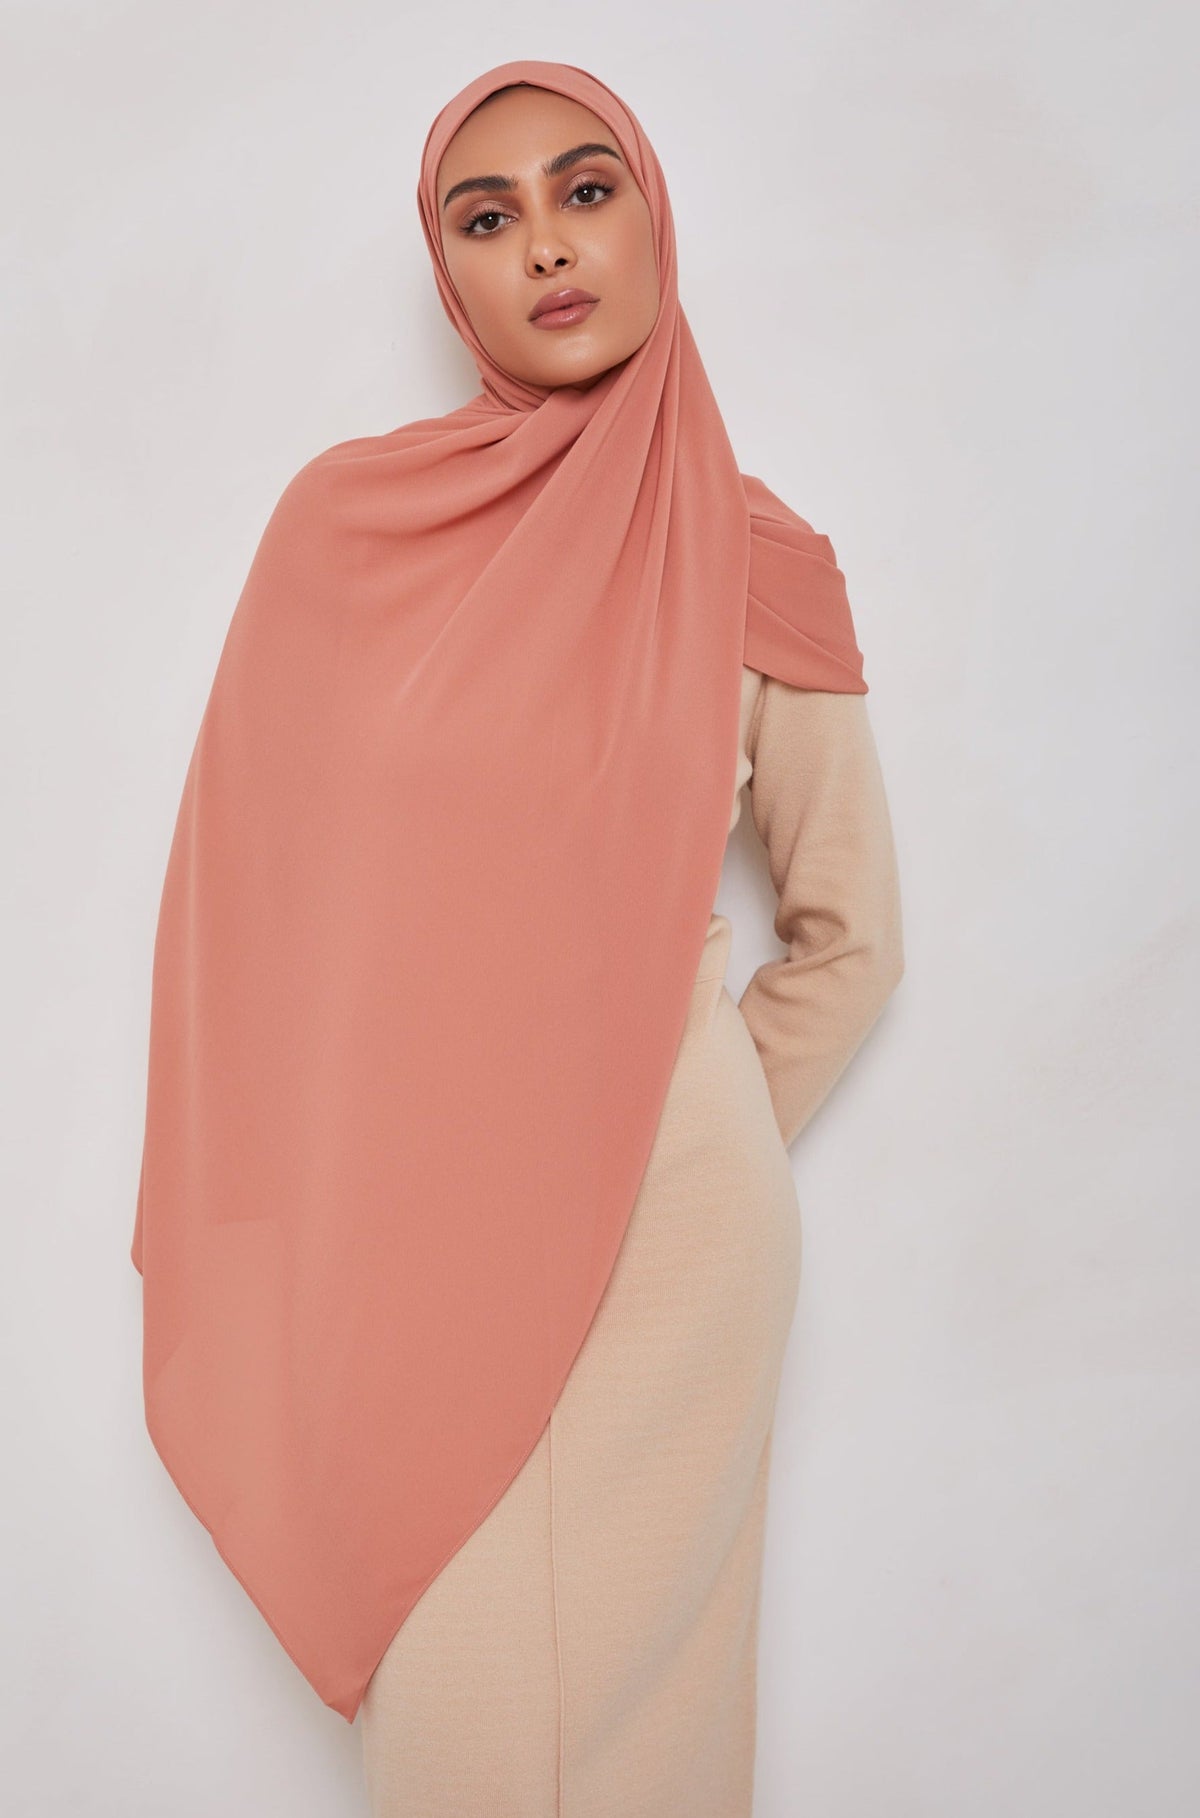 TEXTURE Everyday Chiffon Hijab - Summer Orange epschoolboard 